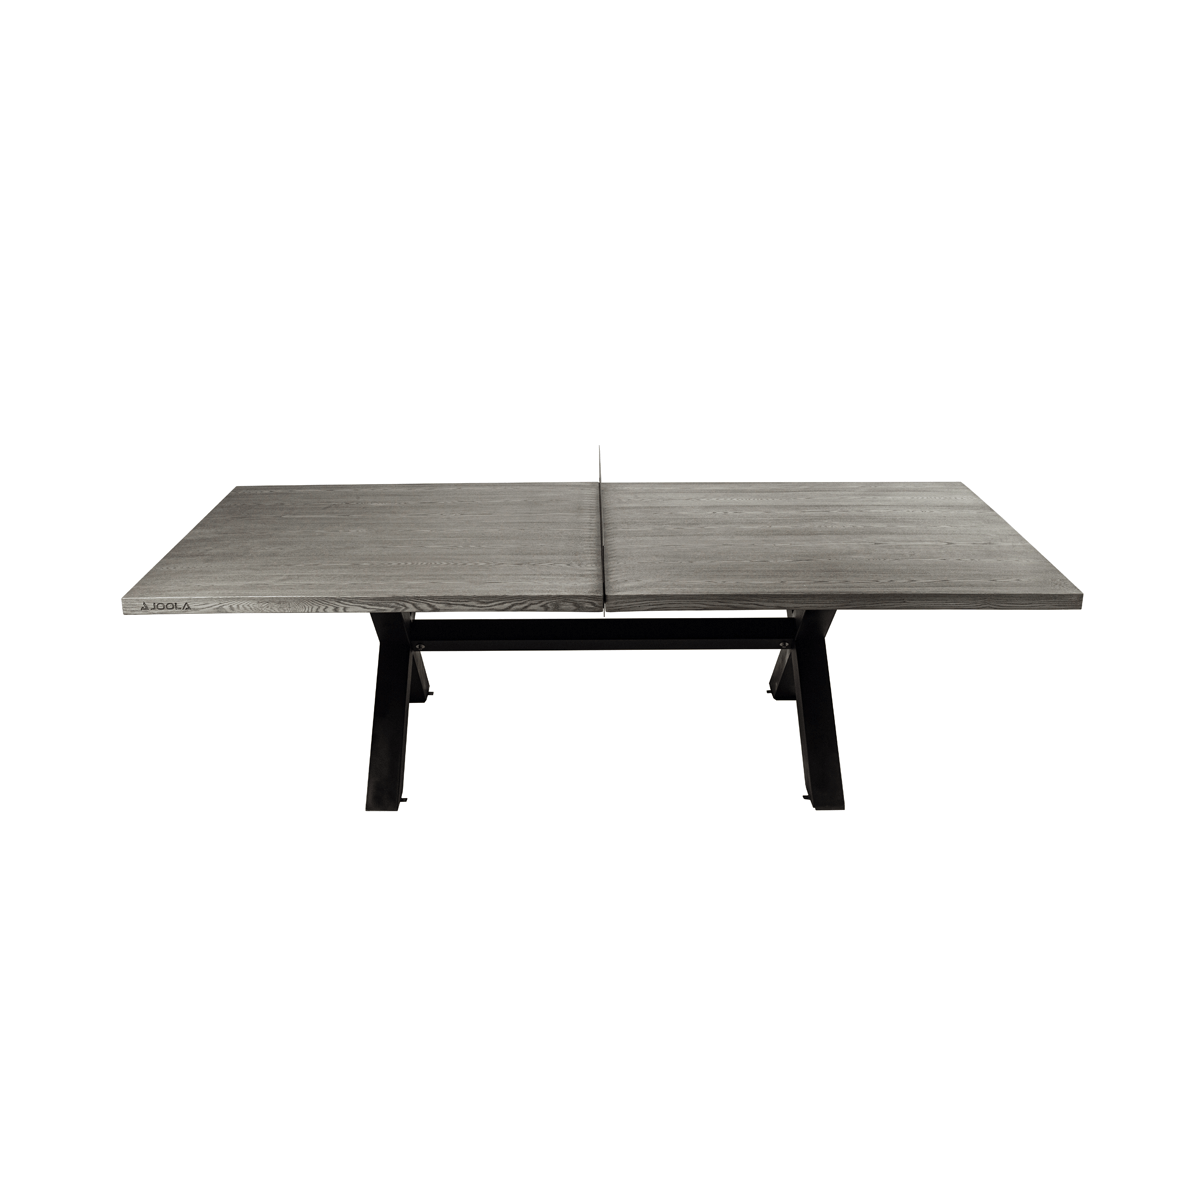 JOOLA Berkshire Gray Indoor/Outdoor Table Tennis Table